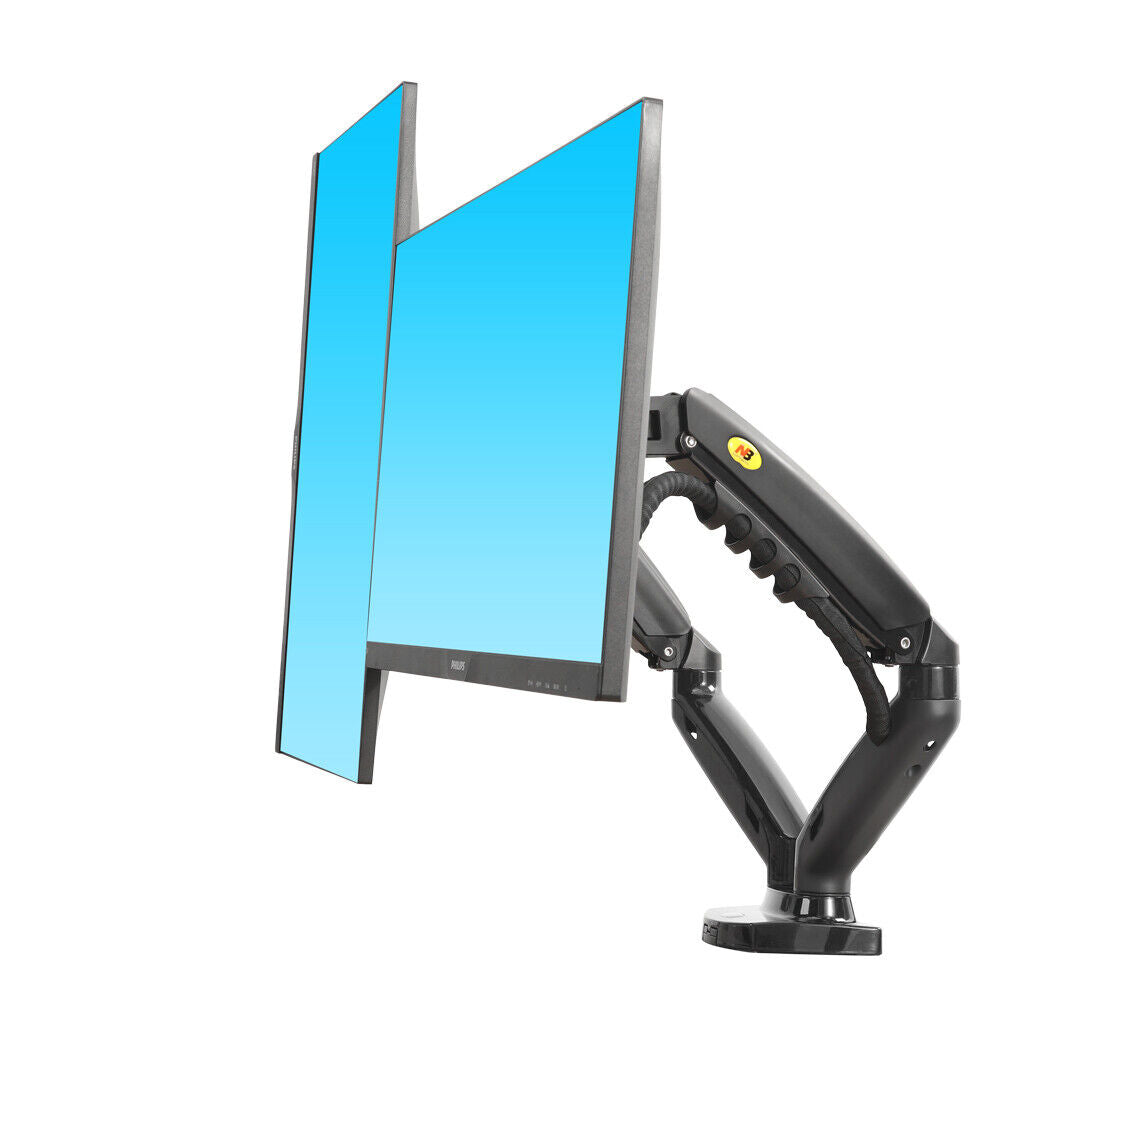 Dual Screen Gas-strut Monitor Stand Mount Desktop Bracket for LED/LCD